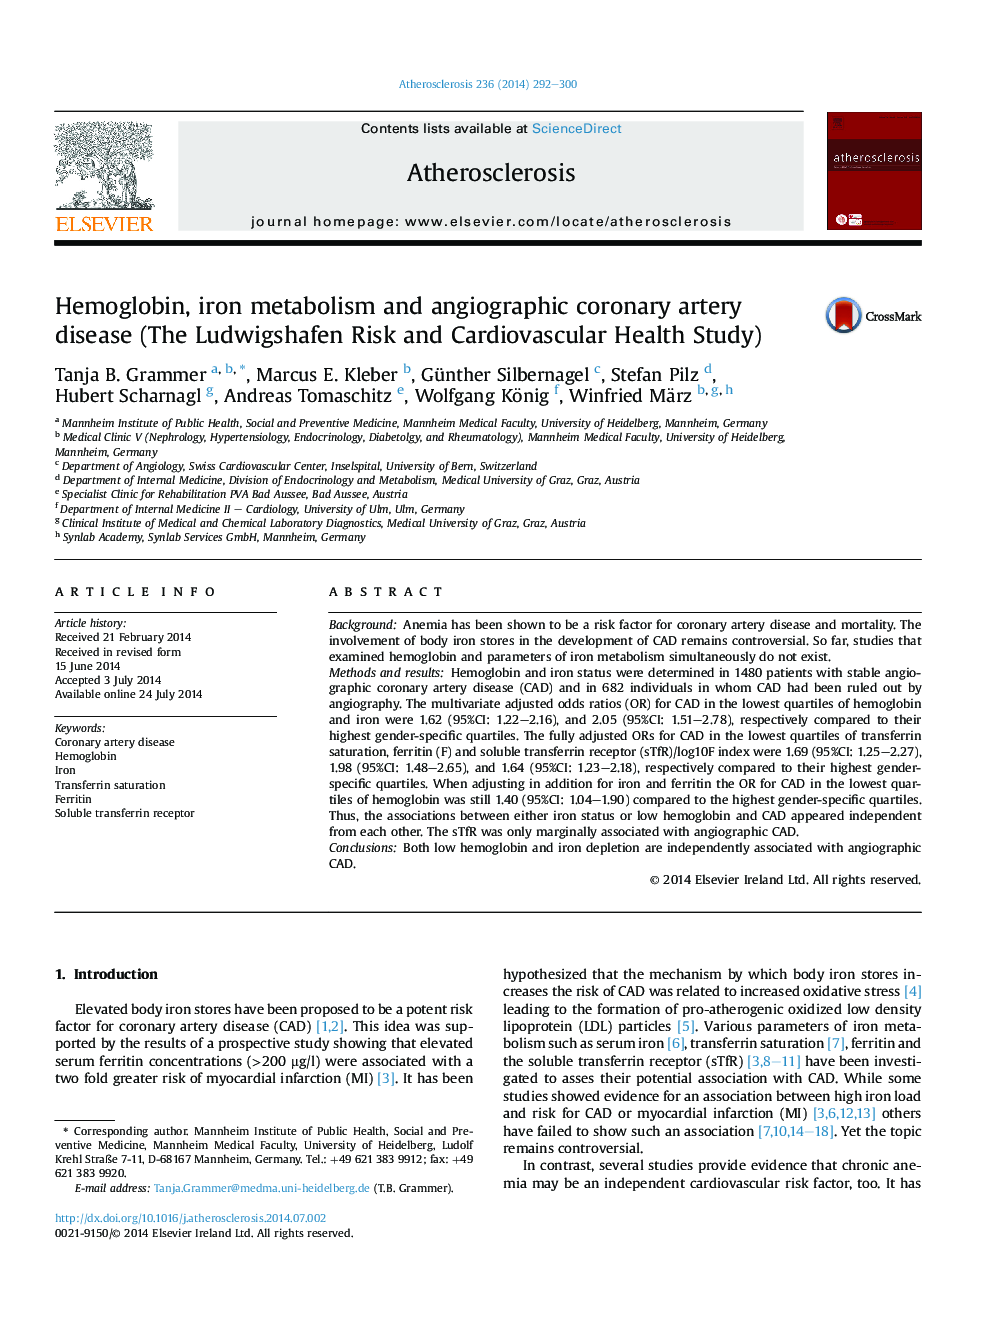 Hemoglobin, iron metabolism and angiographic coronary artery disease (The Ludwigshafen Risk and Cardiovascular Health Study)